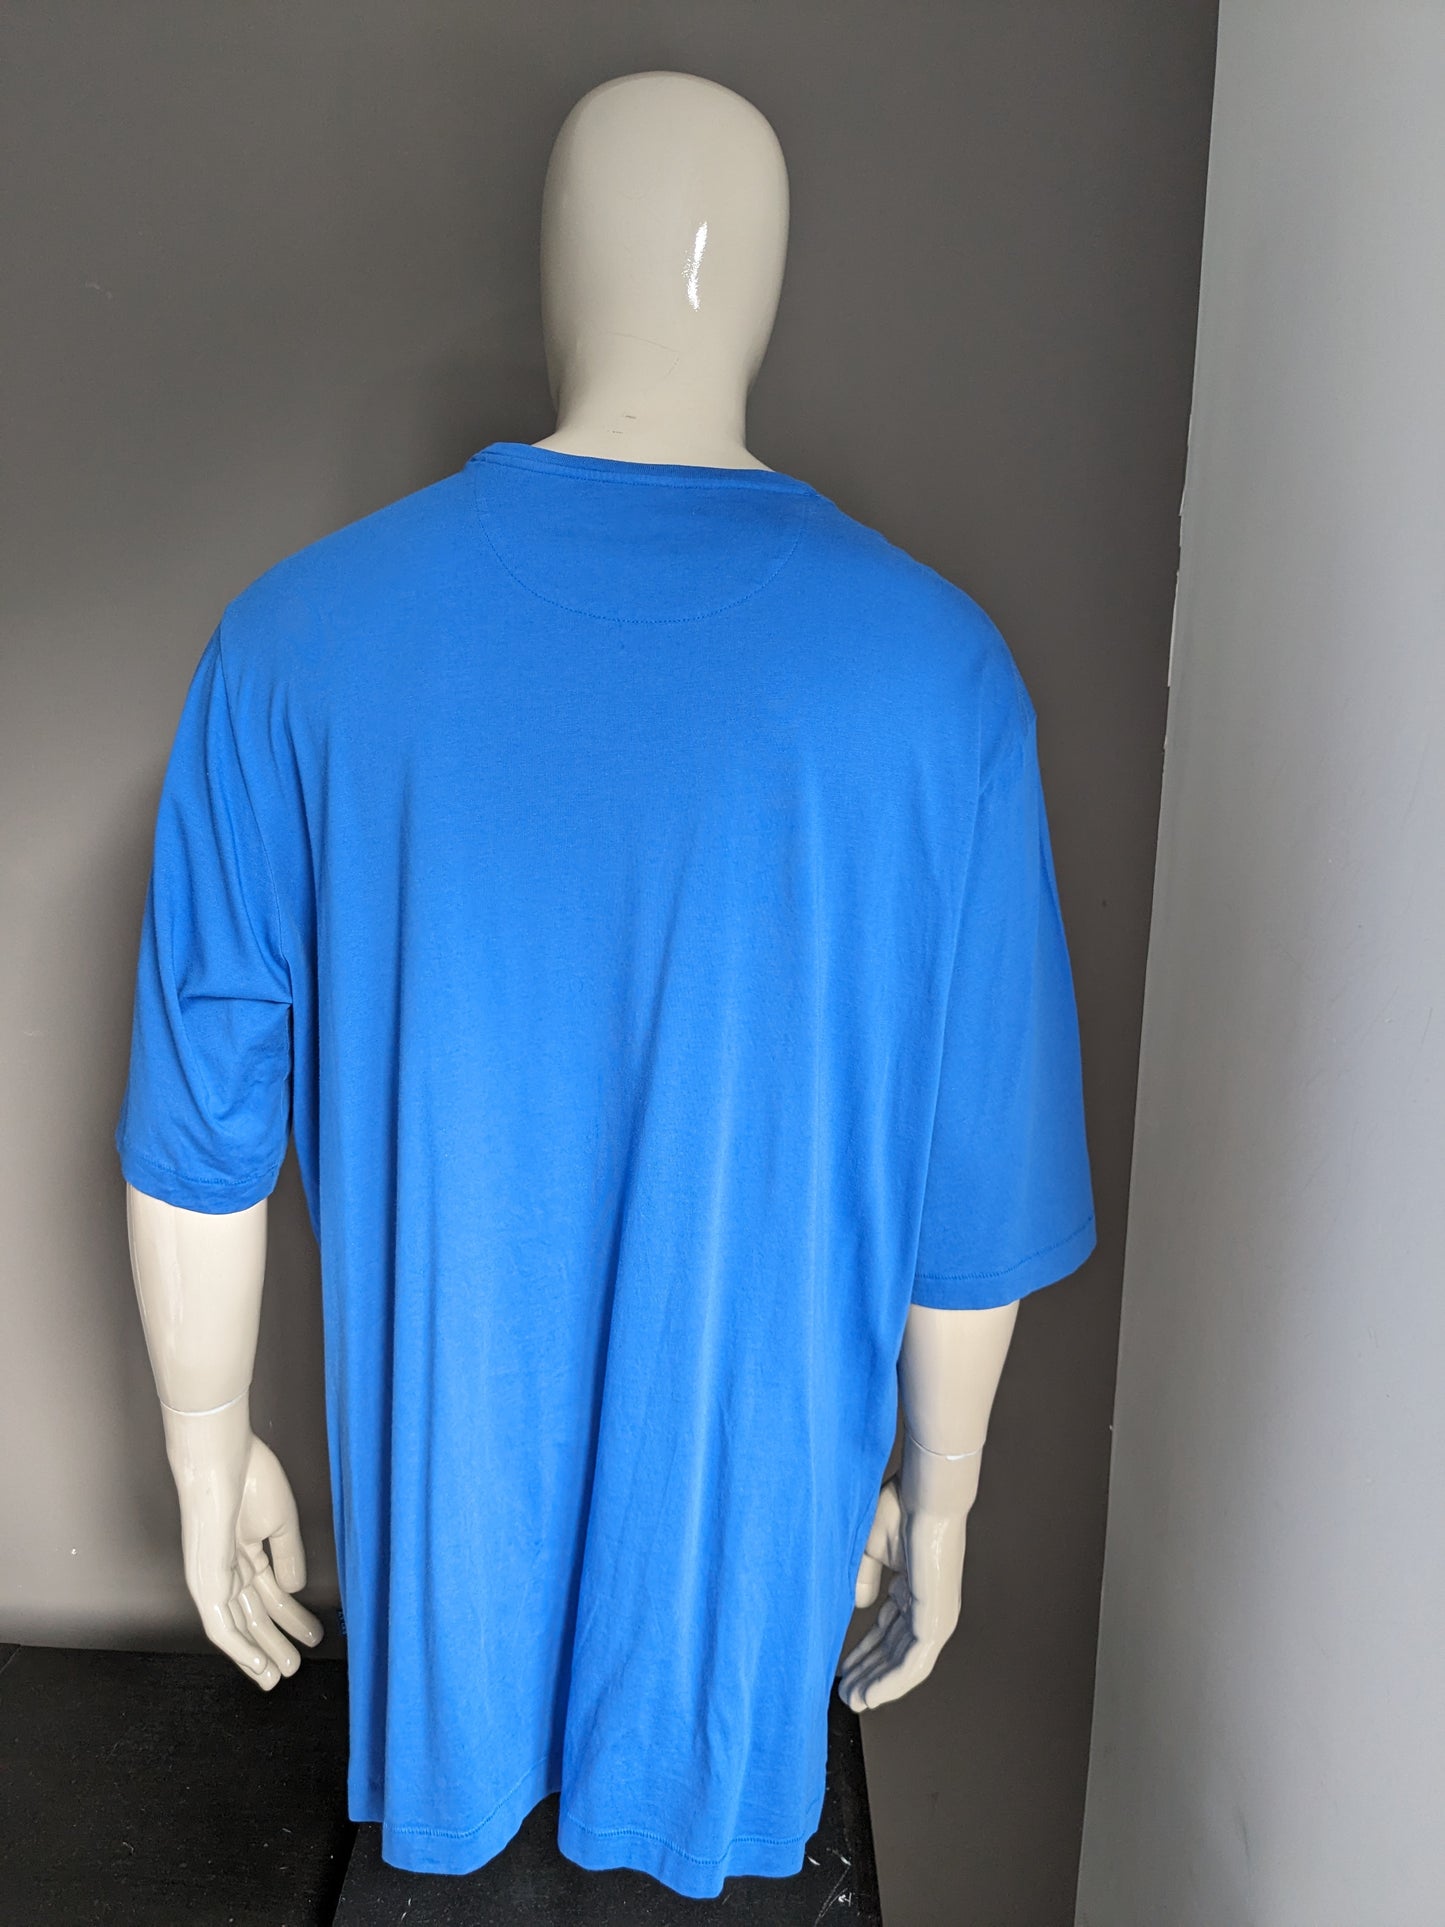 Tommy Bahama Relájate camisa. Color azul. Tamaño 2xl / 3xl.